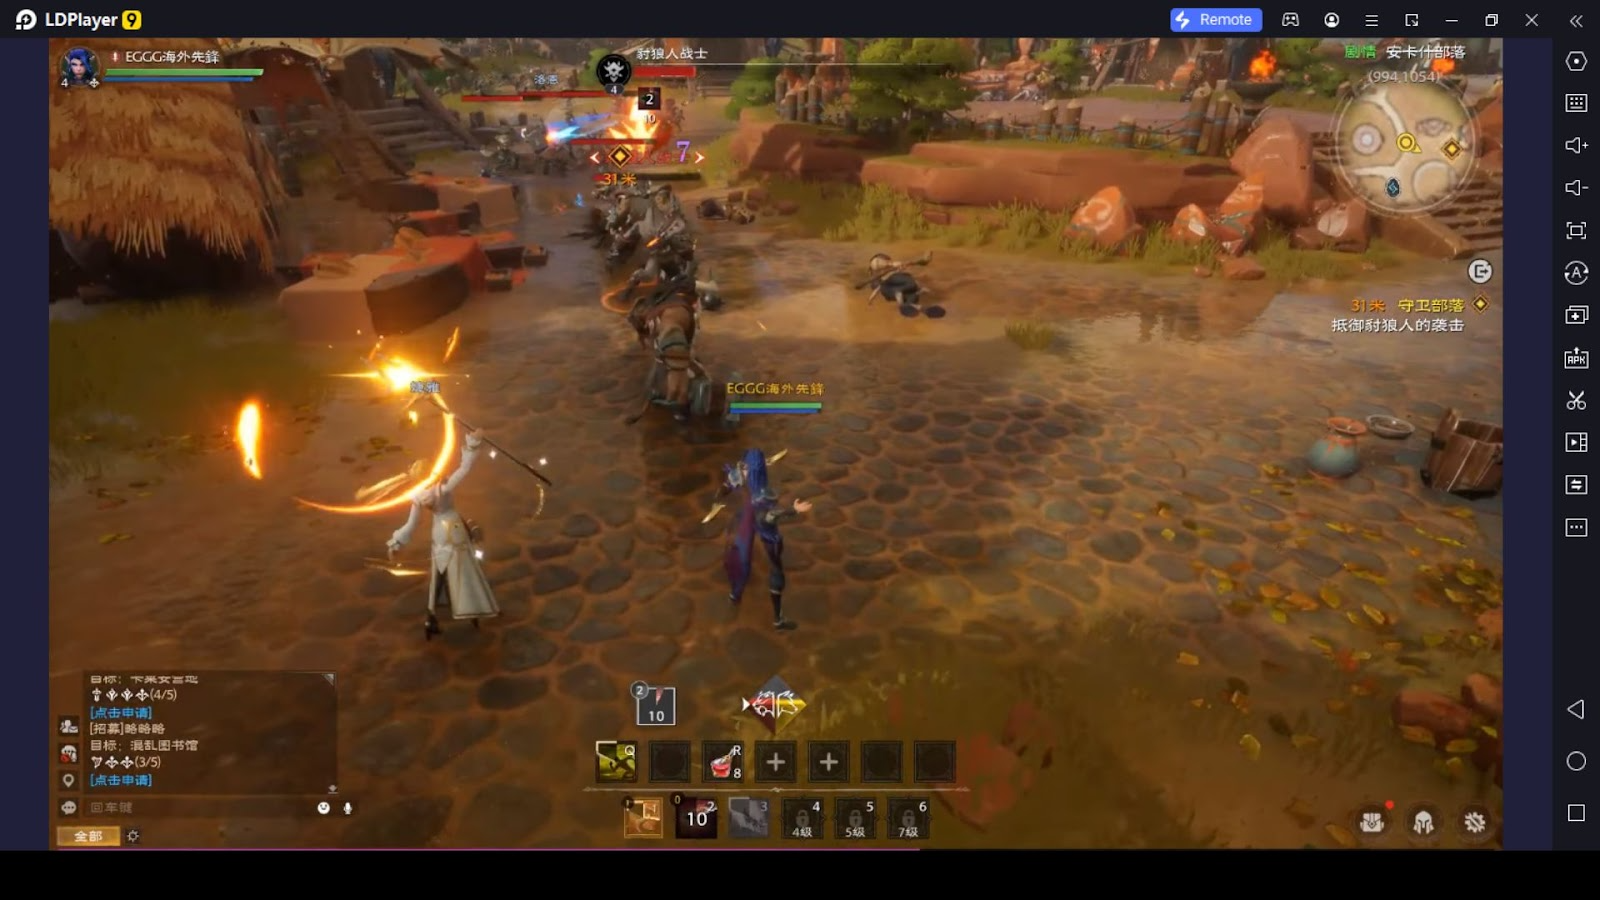 Arenas: Team-based Battles